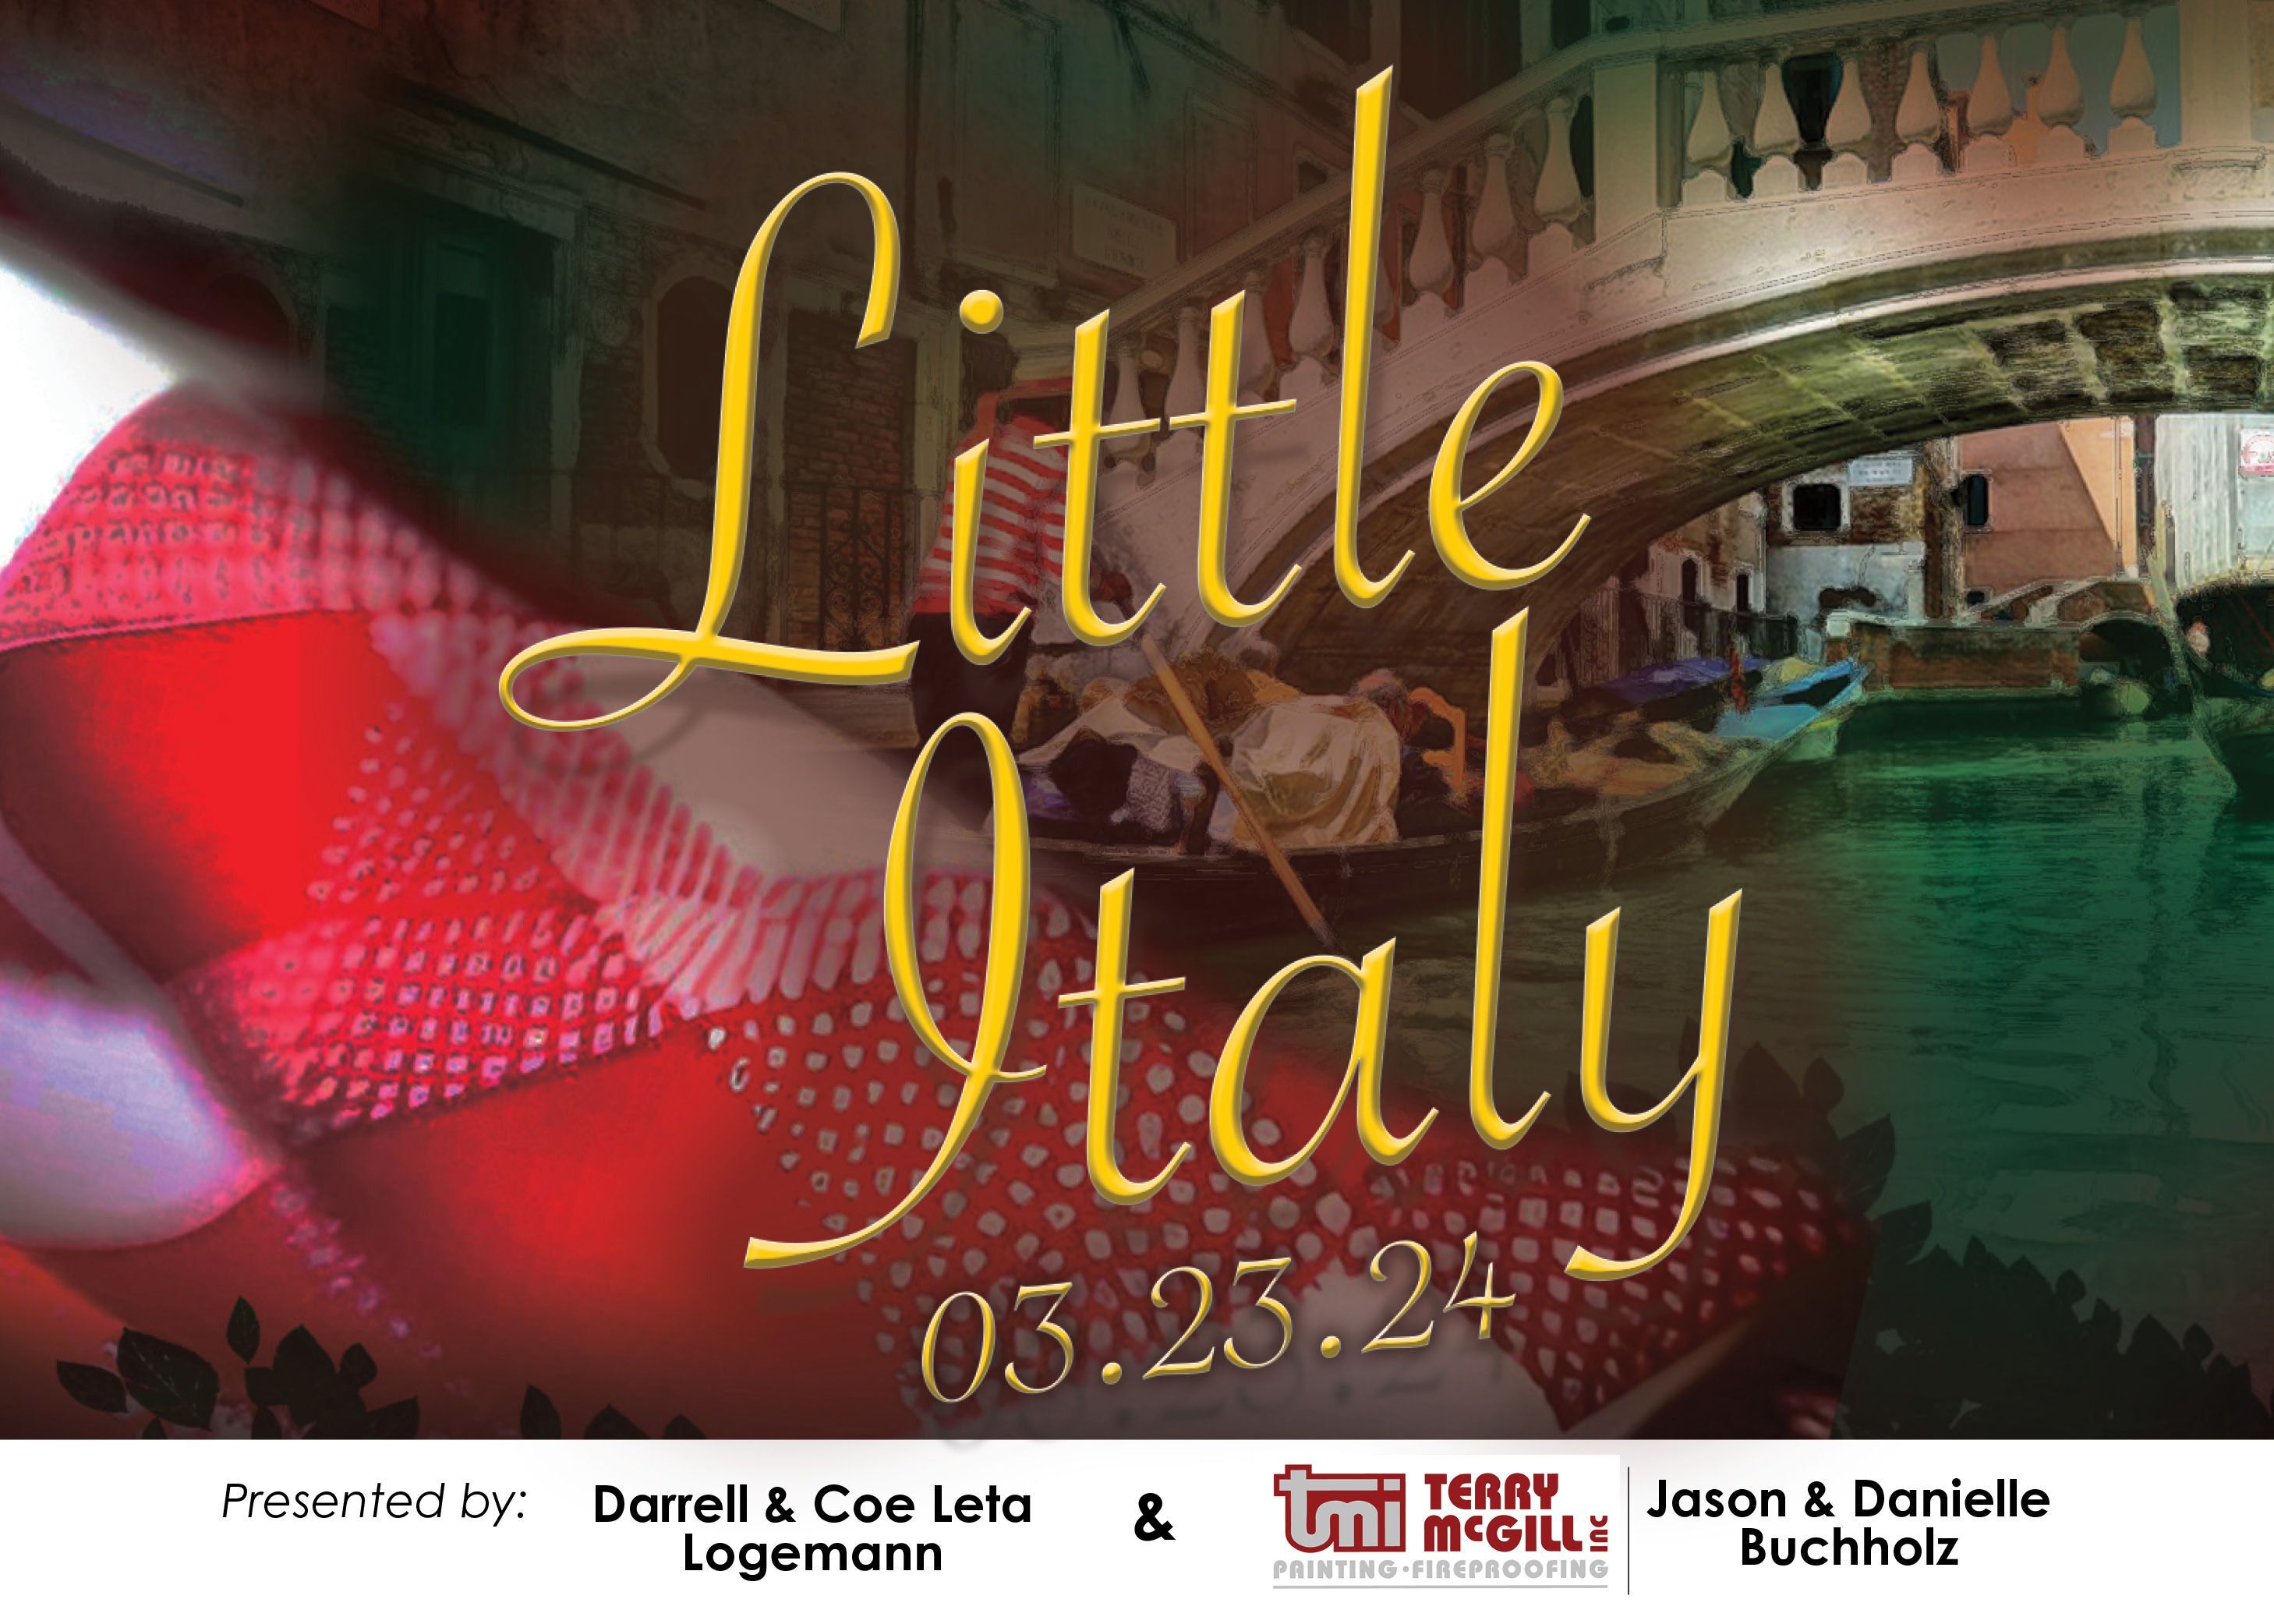 9th Annual Gala "Little Italy"